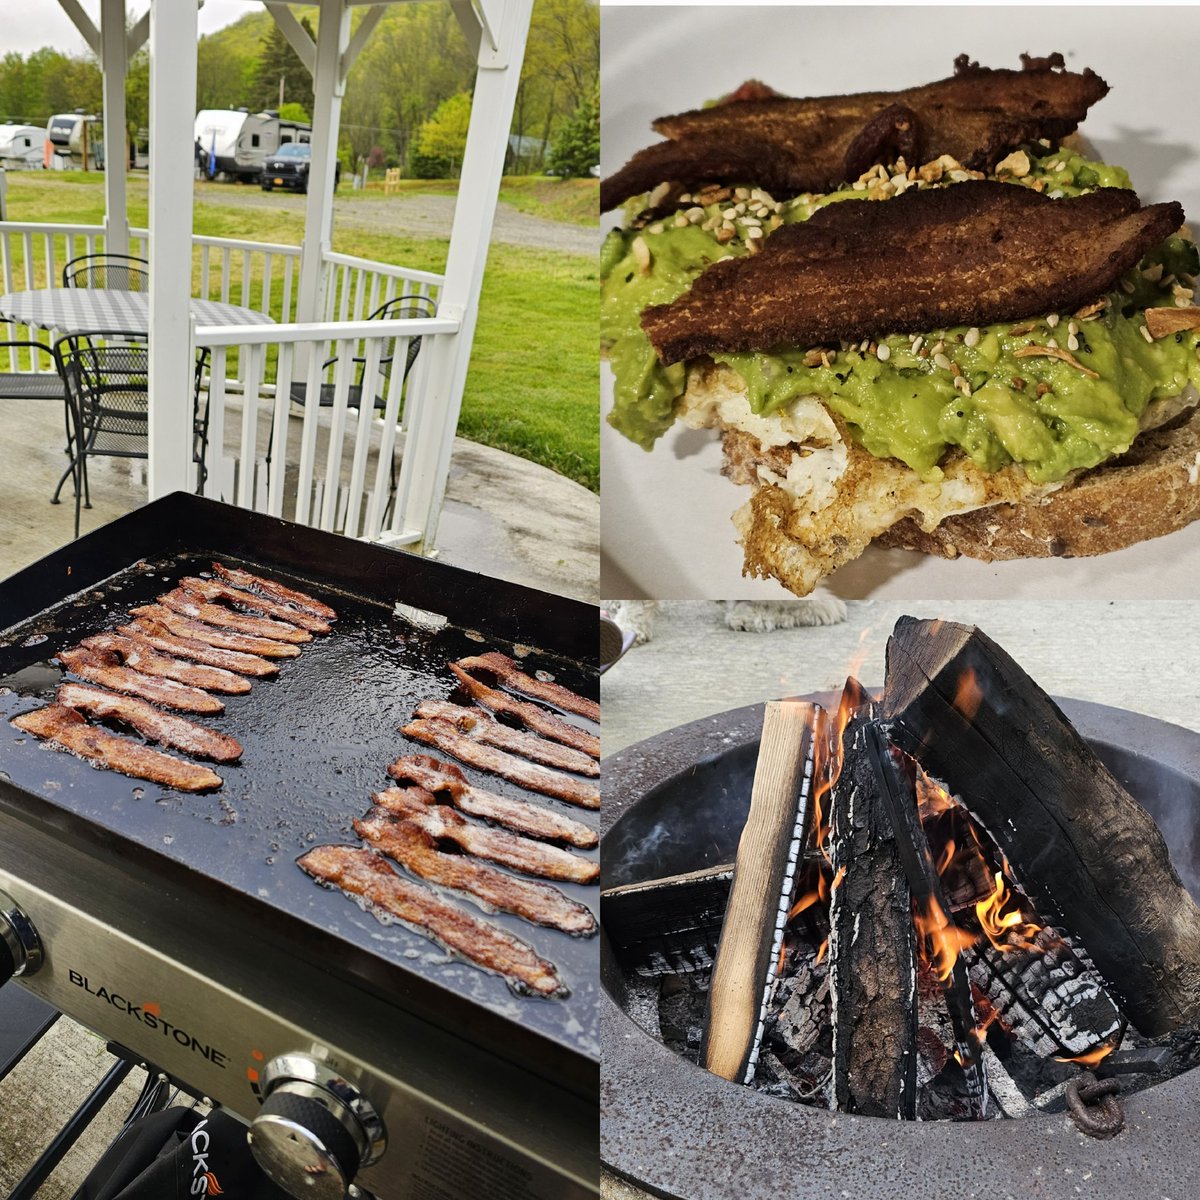 Great start to Mother's Day weekend with a campfire breakfast followed by wine tastings at @DrFrankWine #WeisVineyards and @livingrootswine #FLX #KeukaLake #FingerLakesWine #Camping @CampingWorld @JoKunzmann